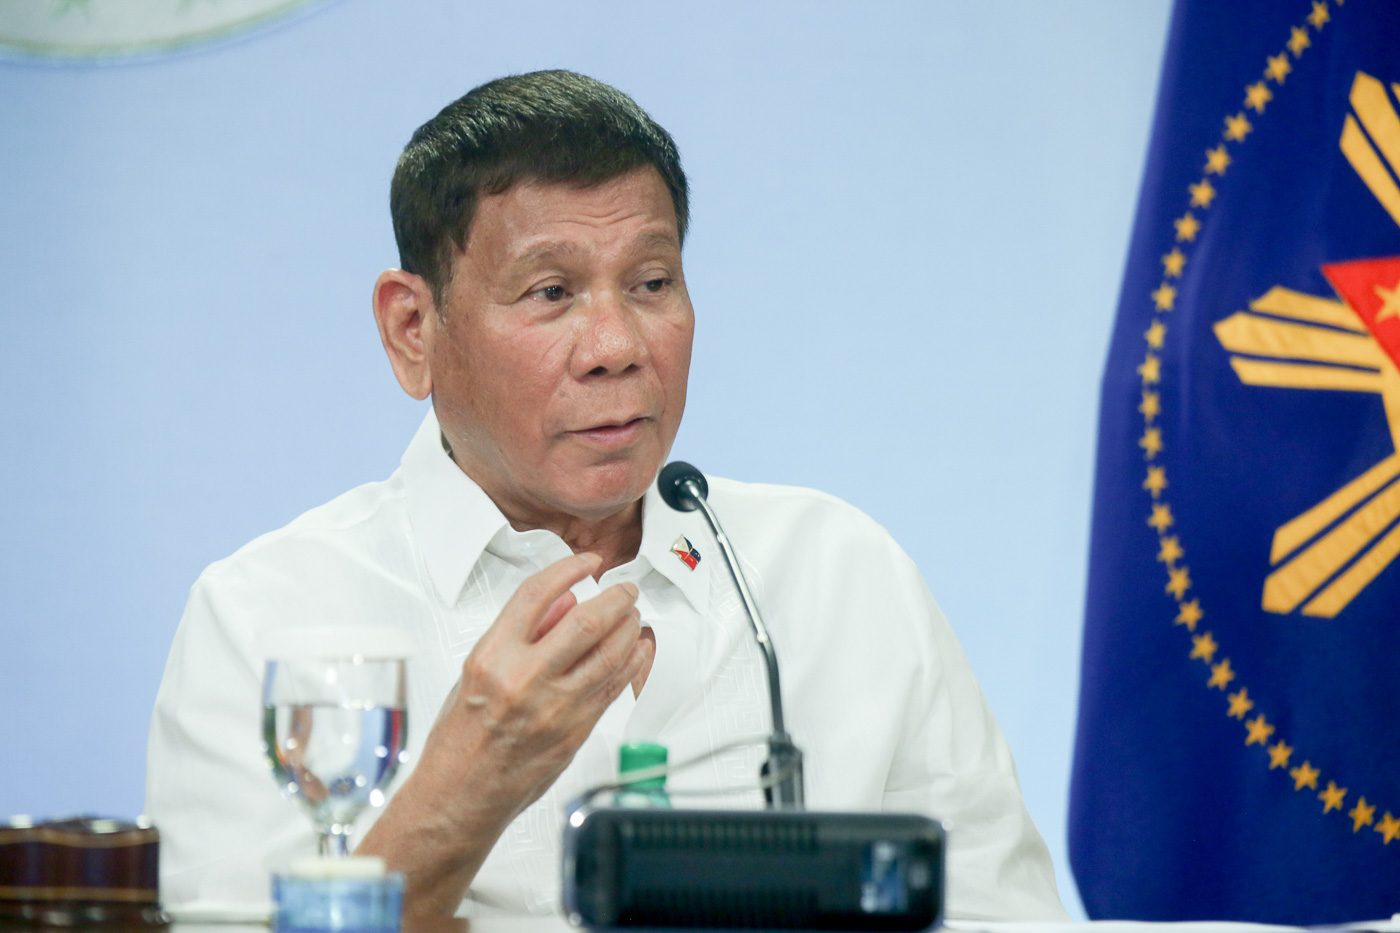 Roque on Duterte trash-talking Hague ruling: Media should ‘apply proper construction’